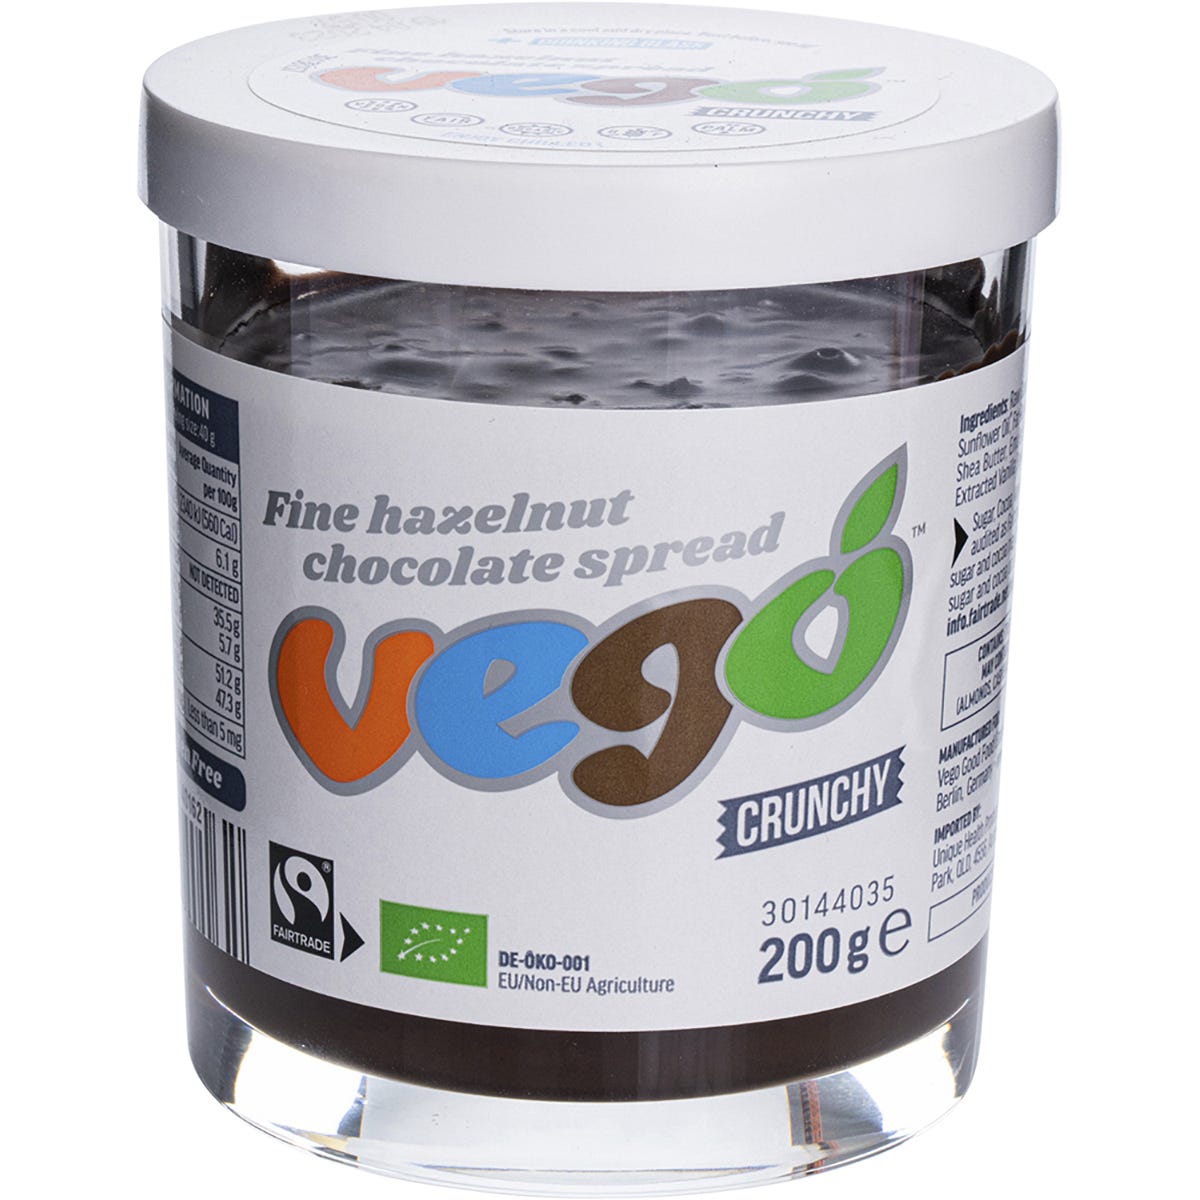 Vego Hazelnut Chocolate Spread Crunchy 200g - Dr Earth - Spreads